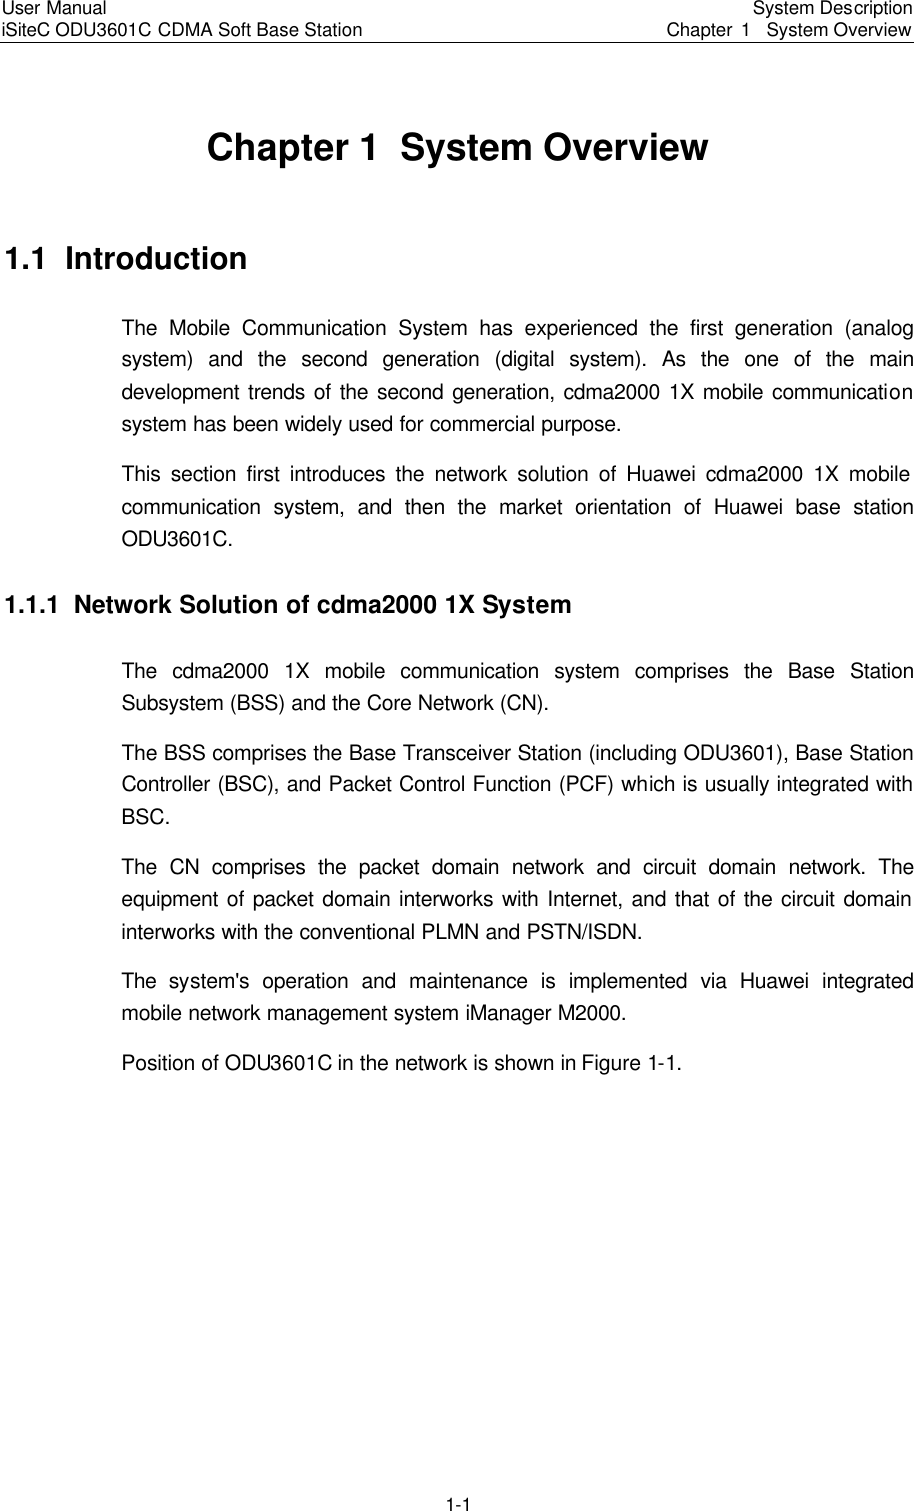 Page 4 of Huawei Technologies ODU3601C-800 CDMA Base Station User Manual 2